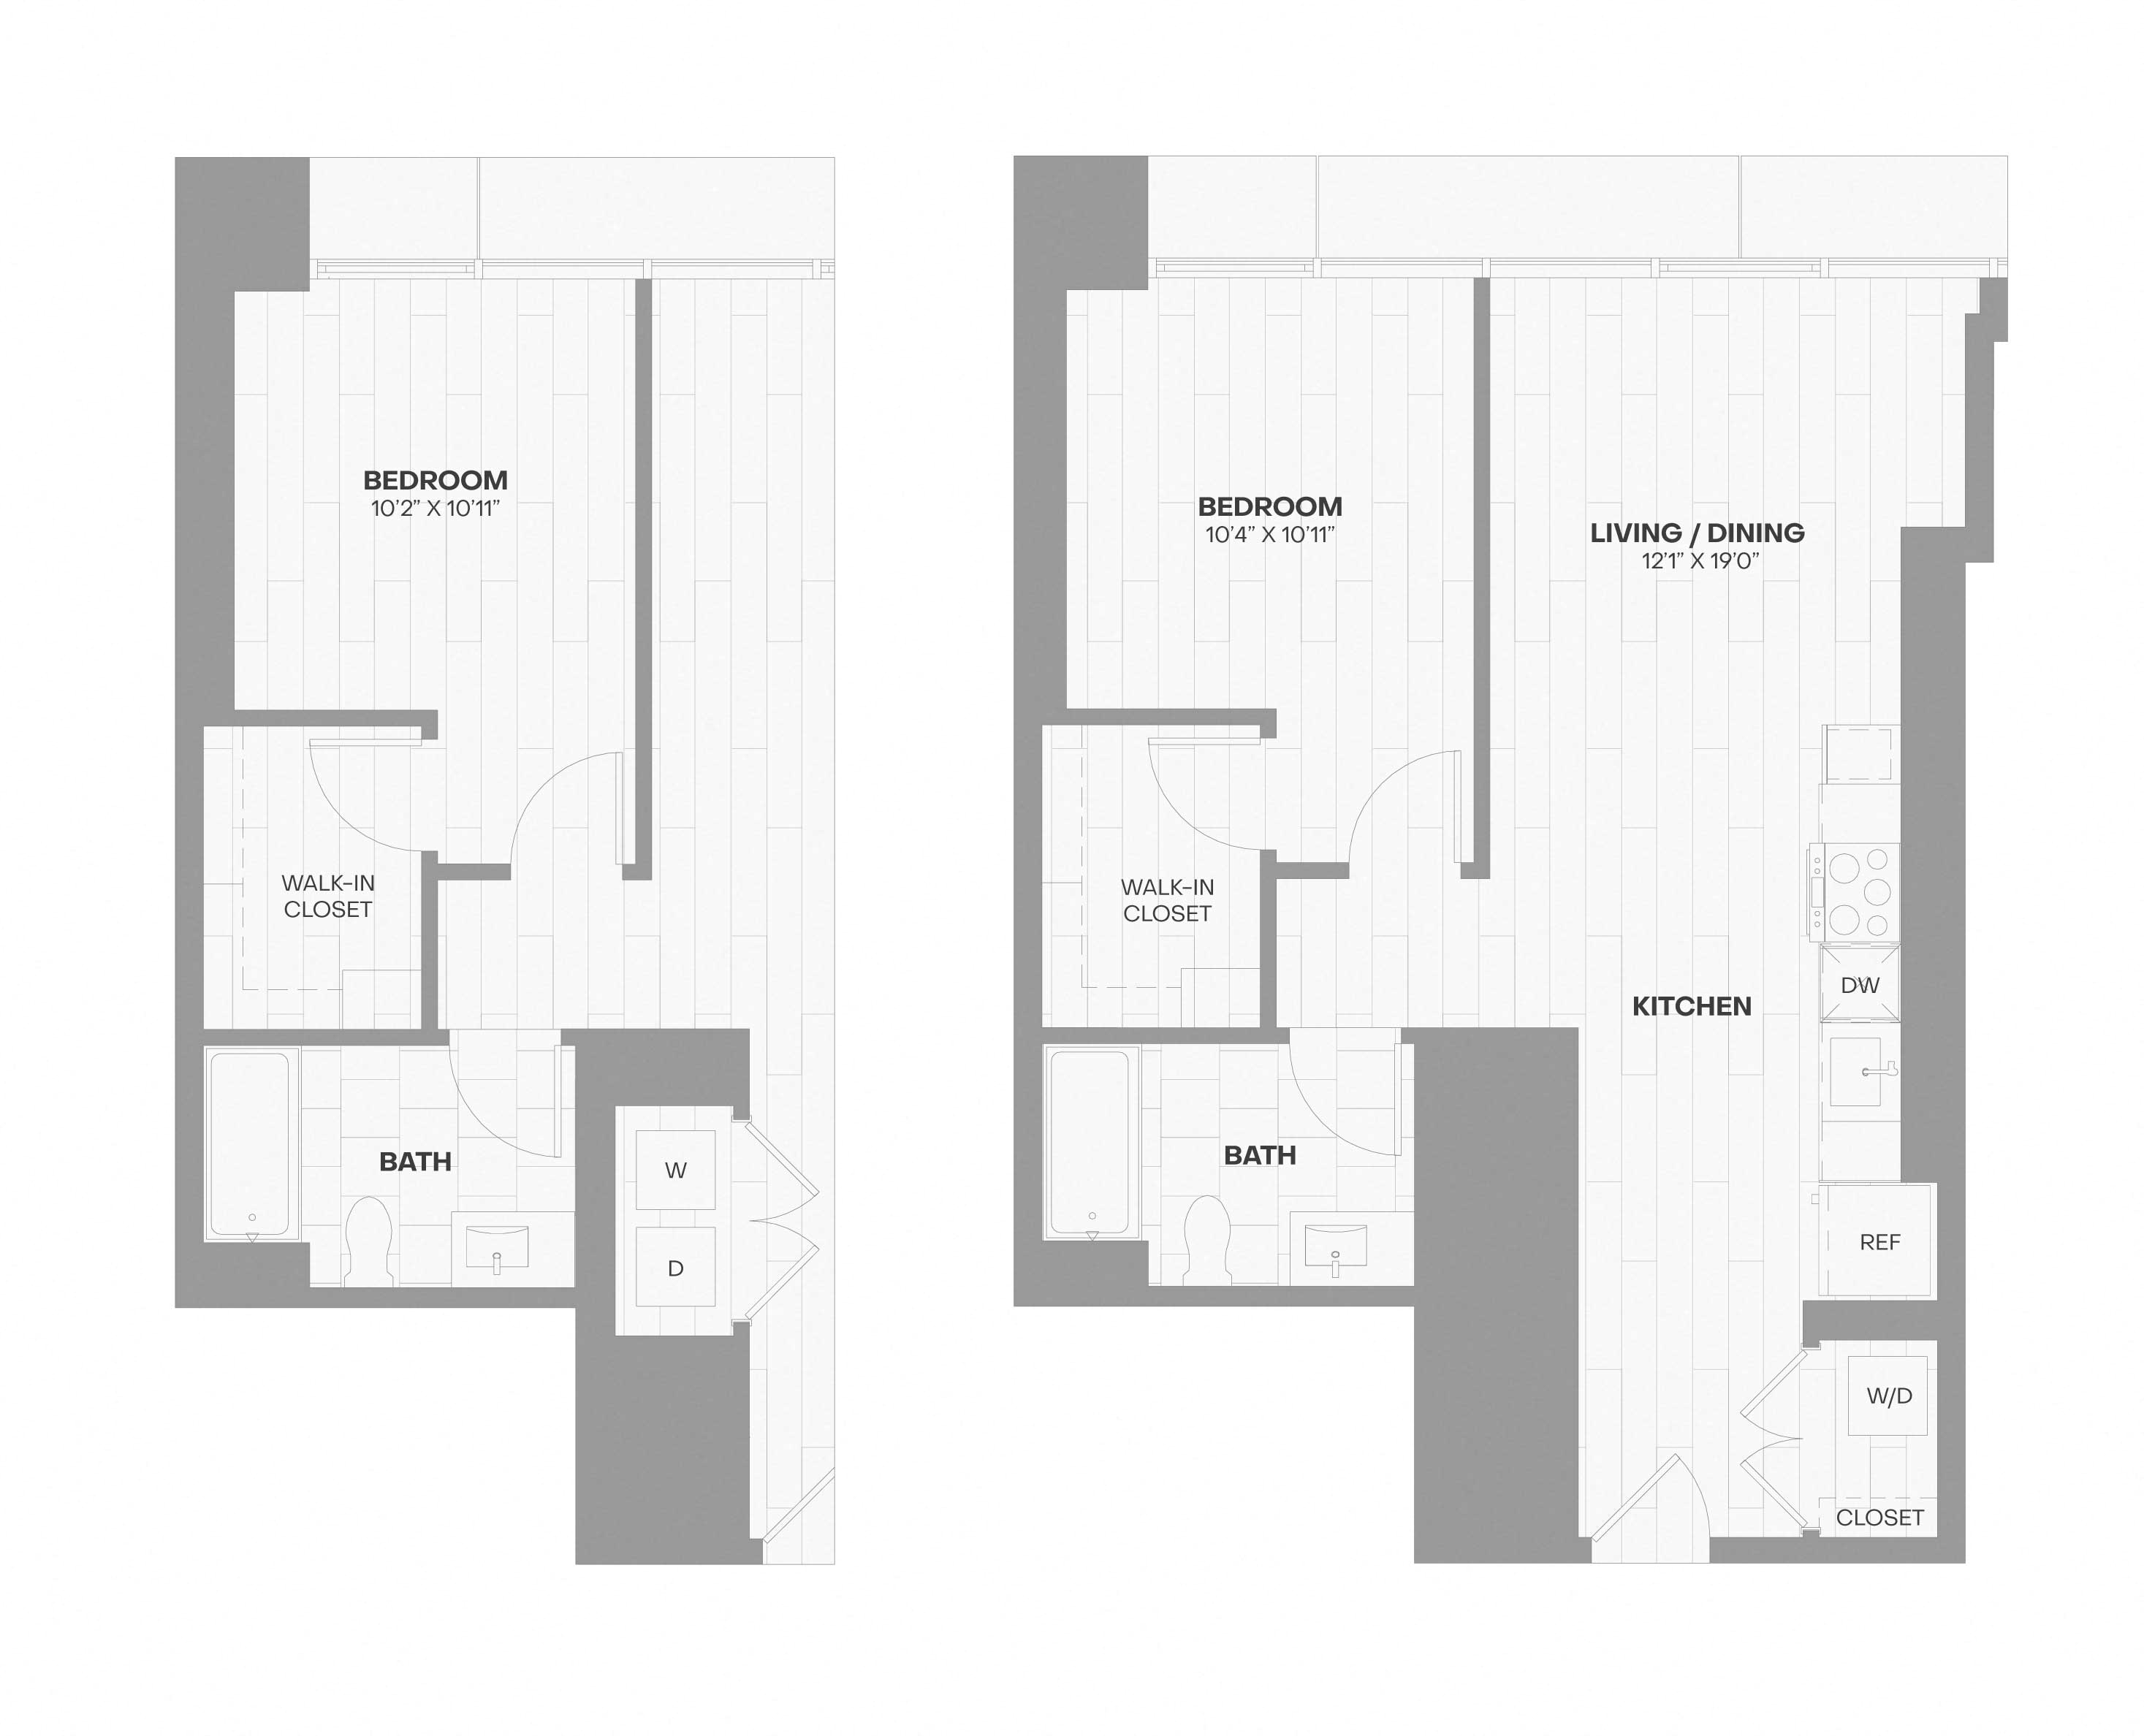 Apartment 1610 floorplan